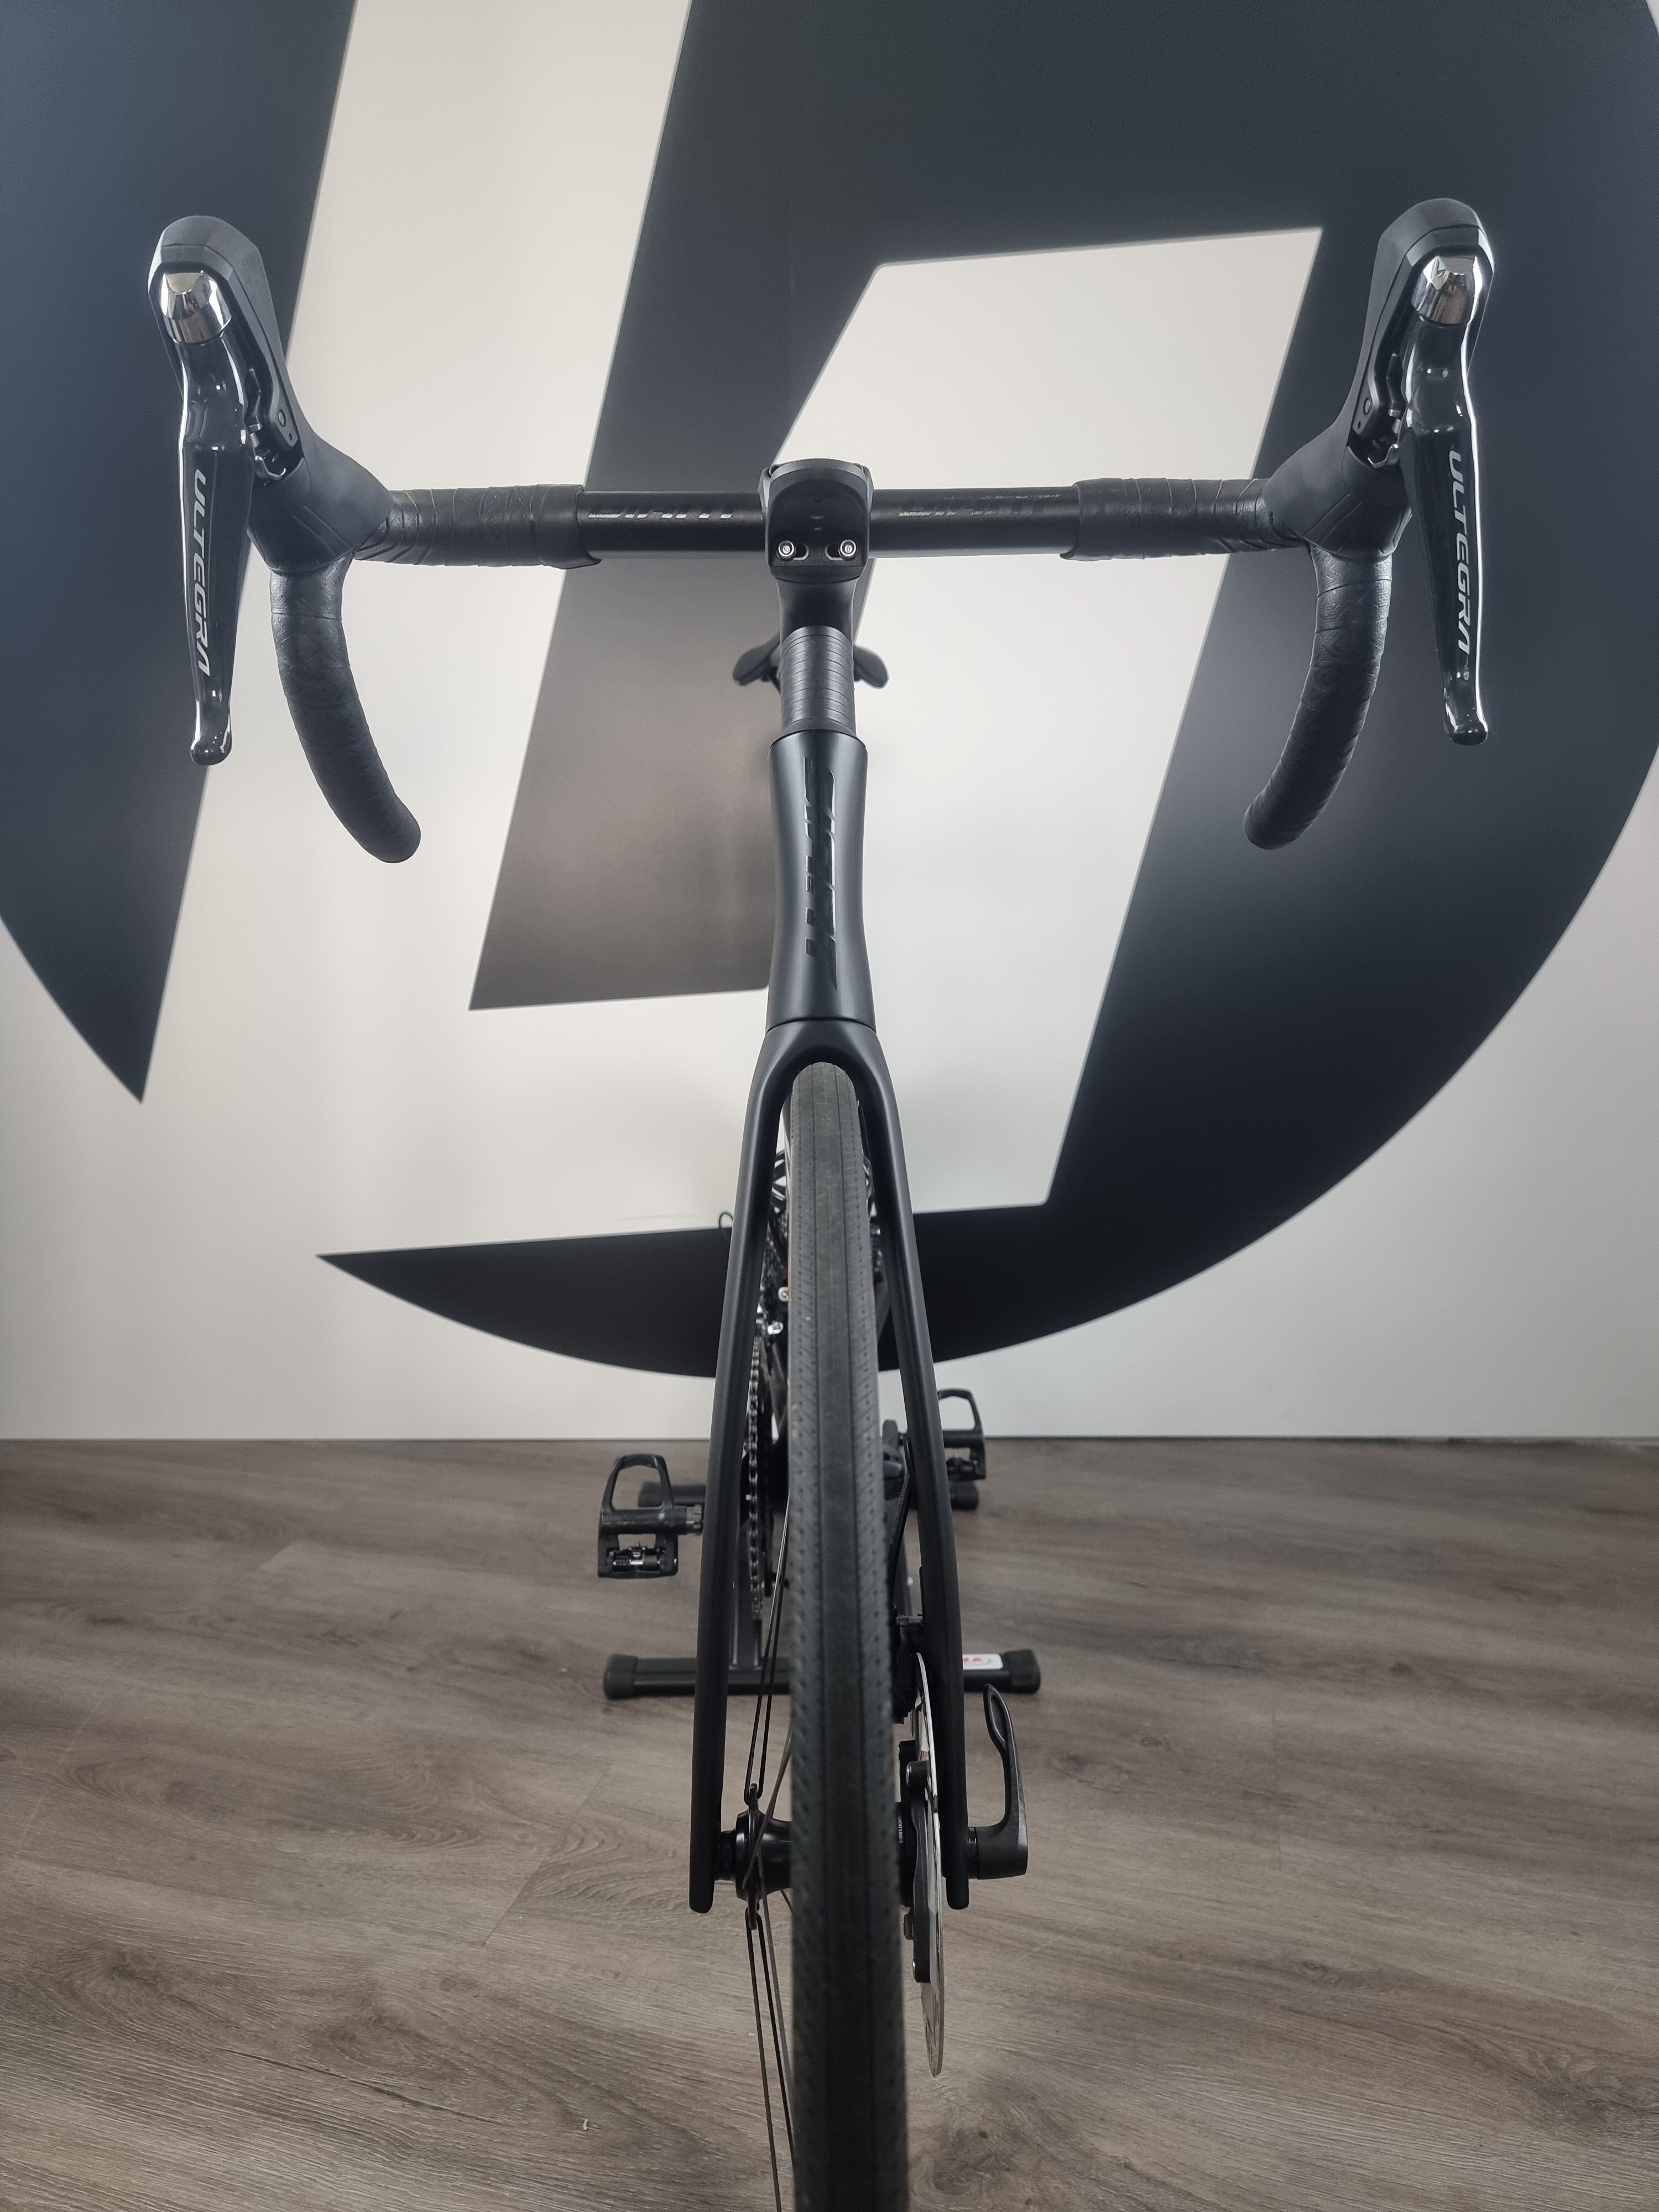 Giant Propel Advanced Pro 1 Disc 2021 - Bici da corsa usata